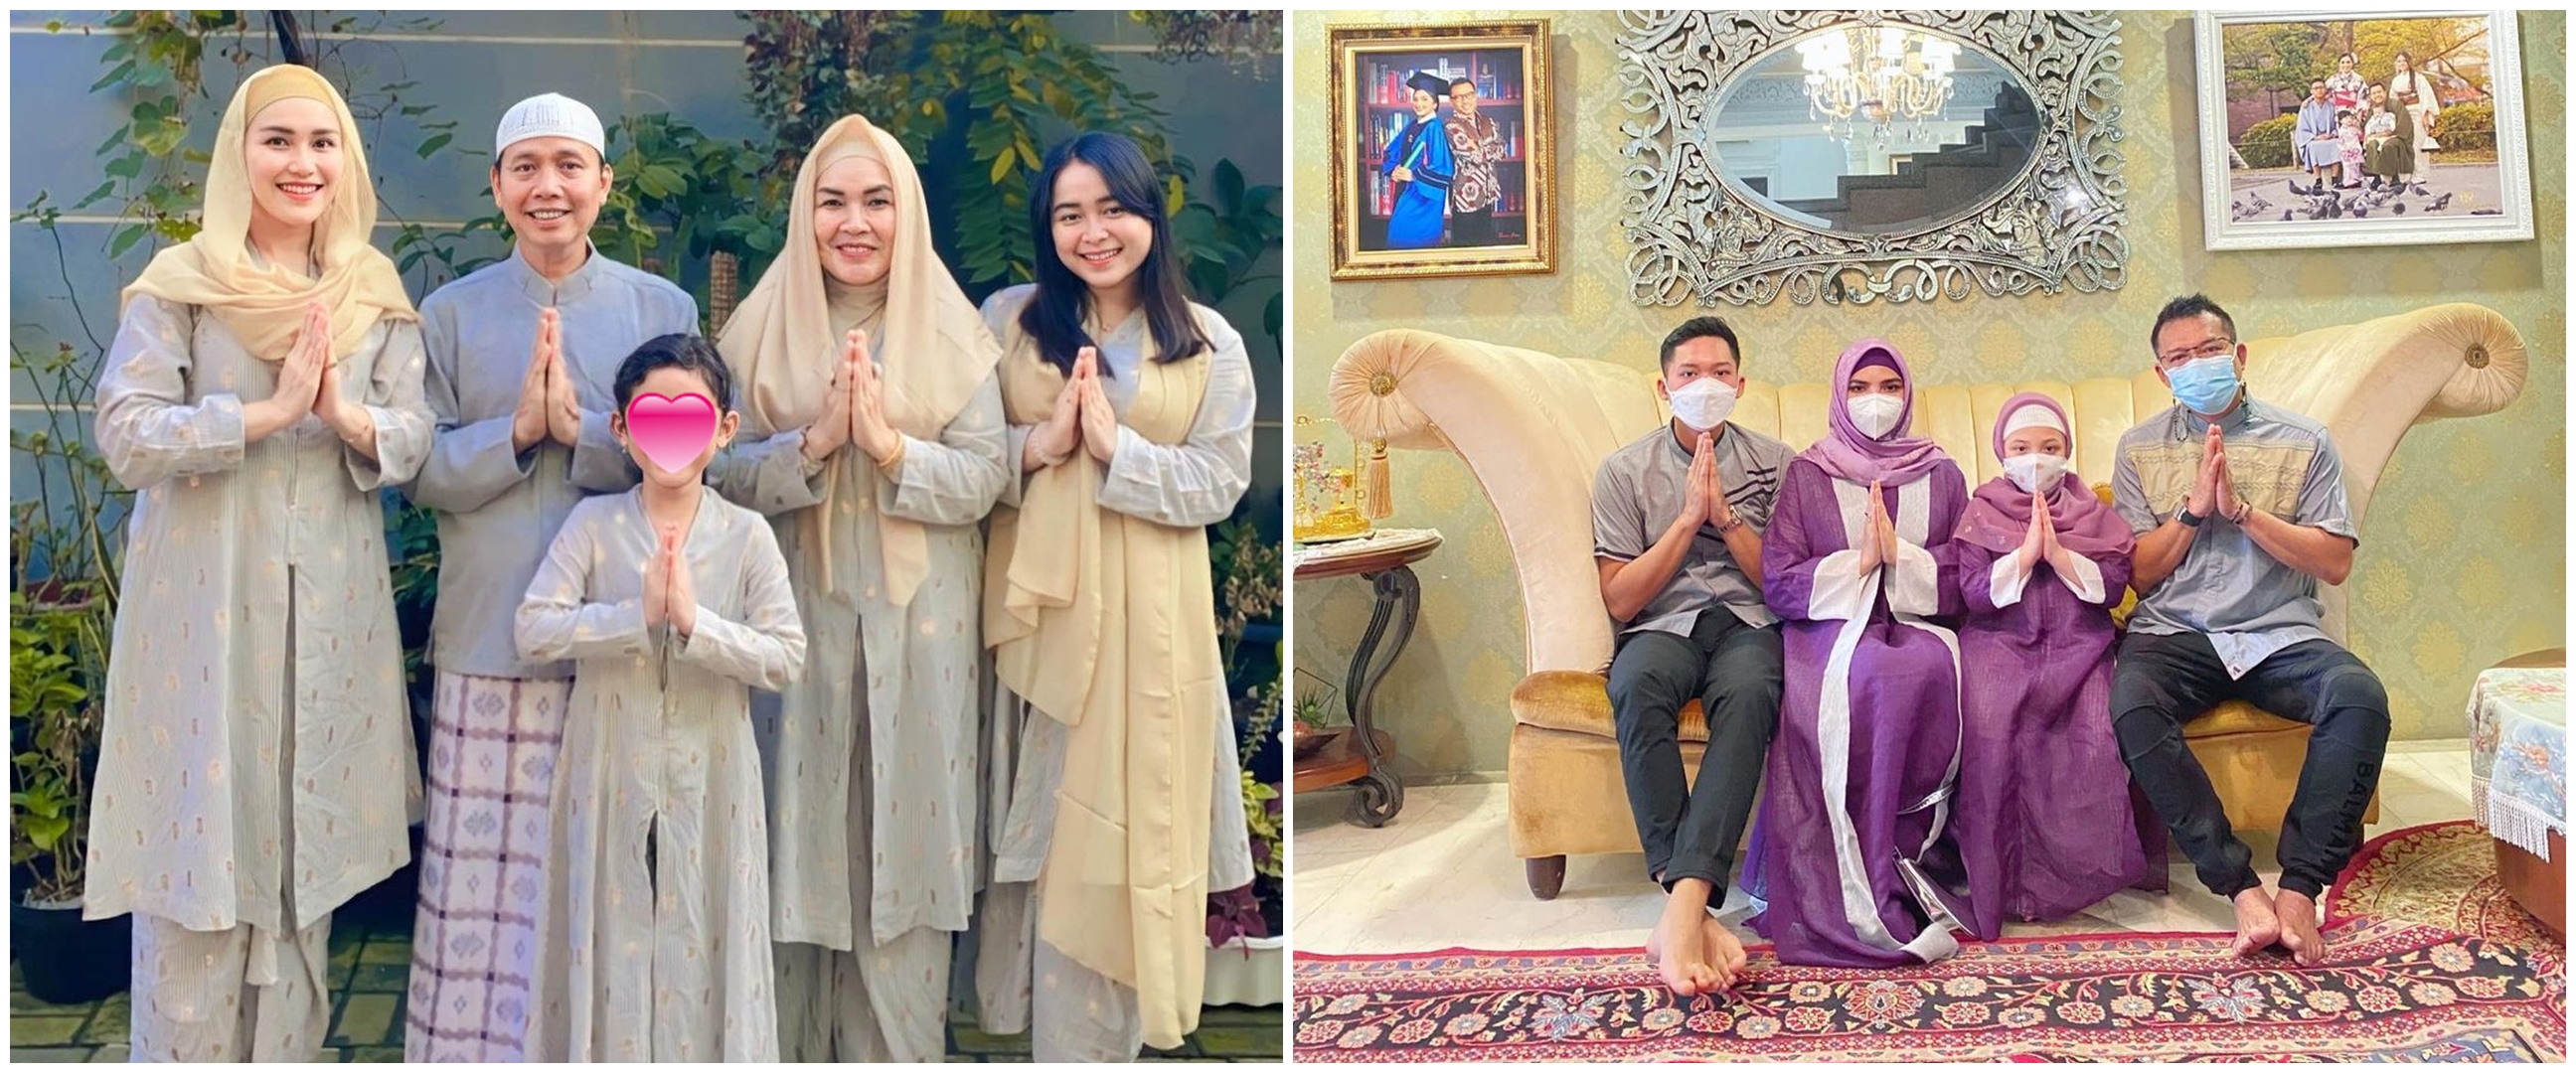 11 Seleb rayakan Idul Adha di rumah bareng keluarga, gayanya kompak